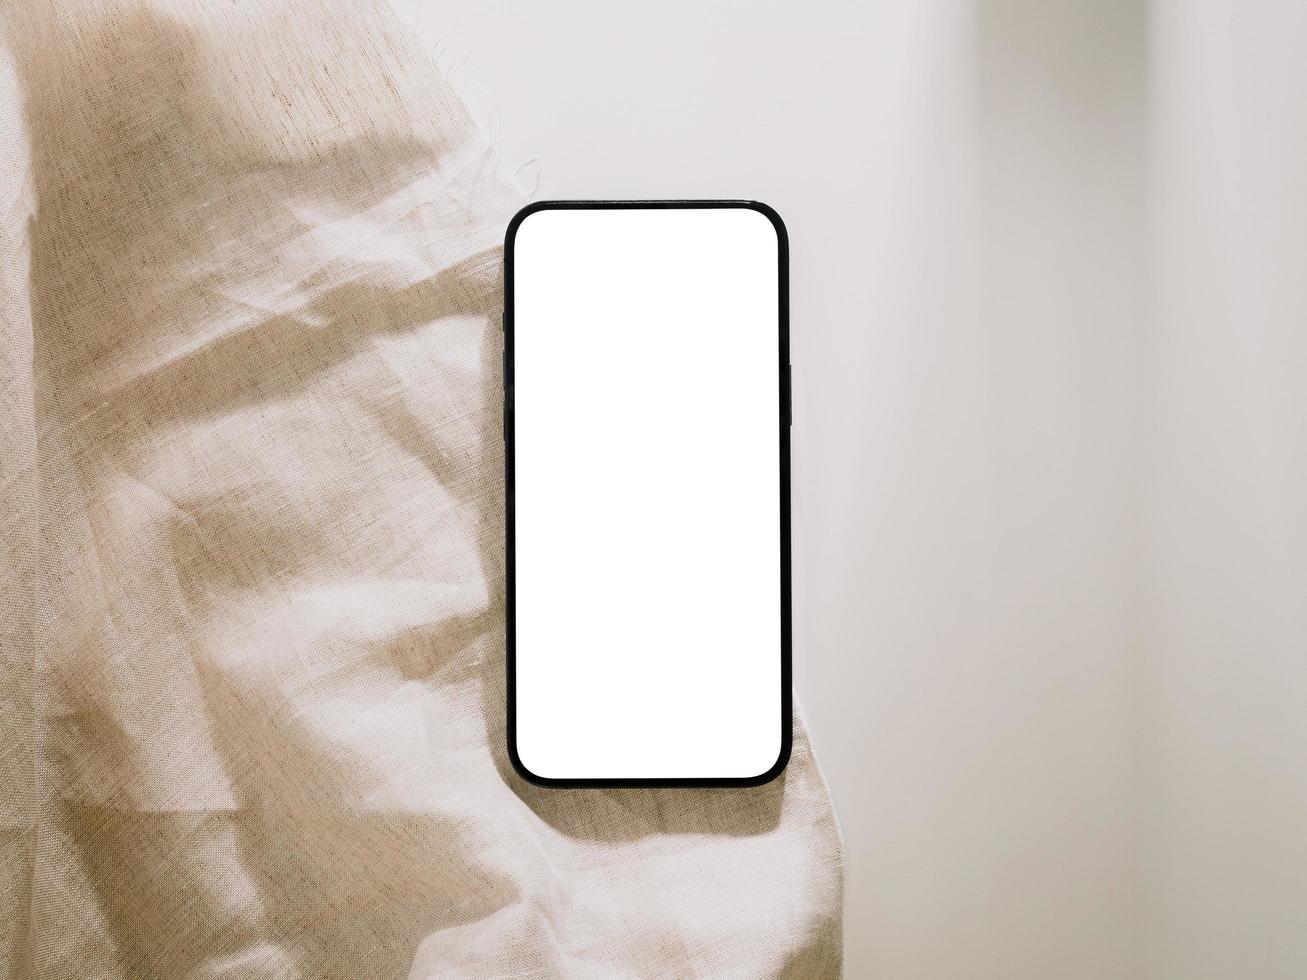 smartphonemodel met telefoon met blanco schermsjabloon, plat gelegd foto